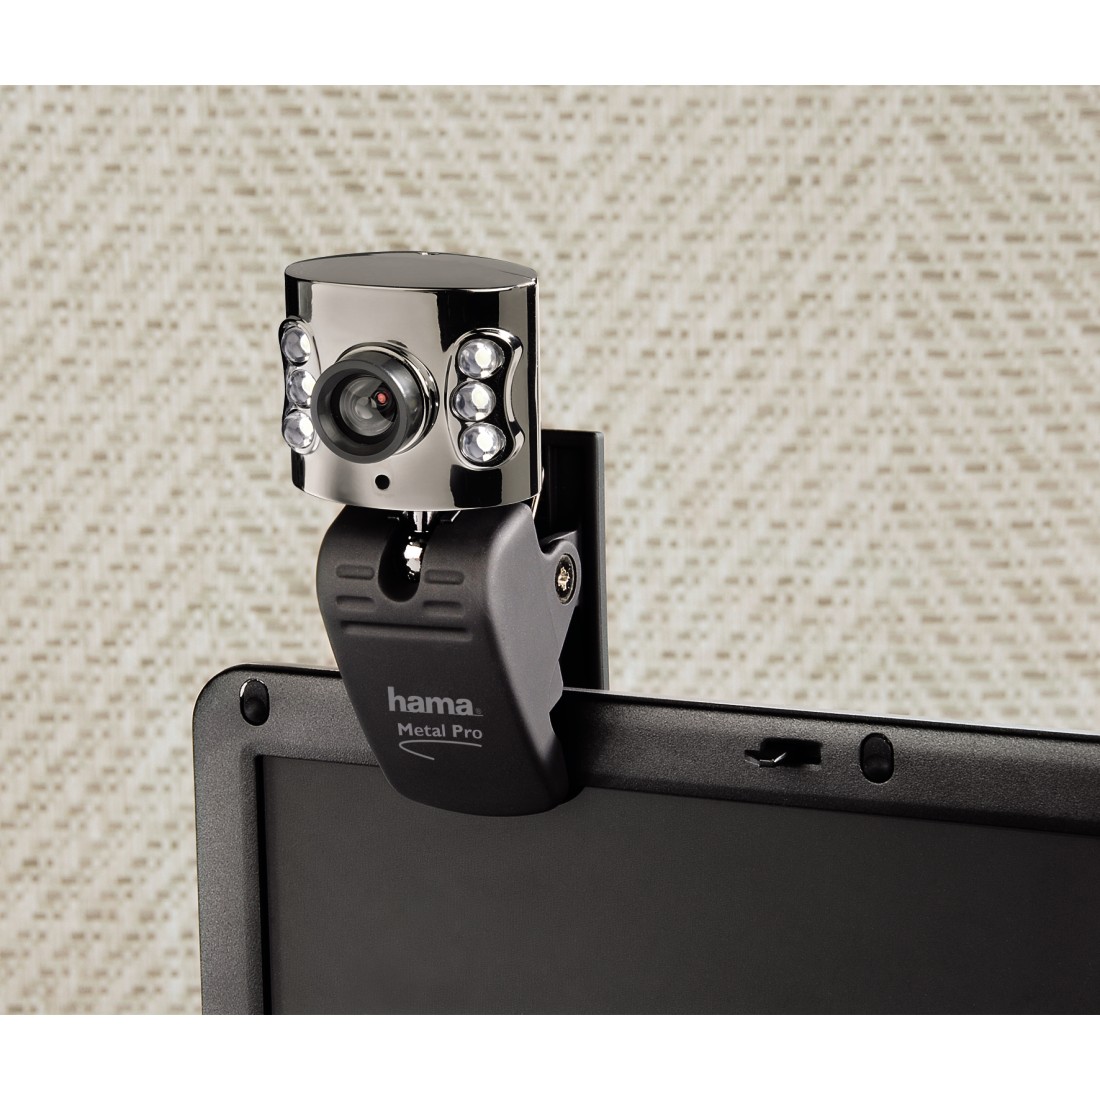 hama metal pro usb20 camera driver windows 7